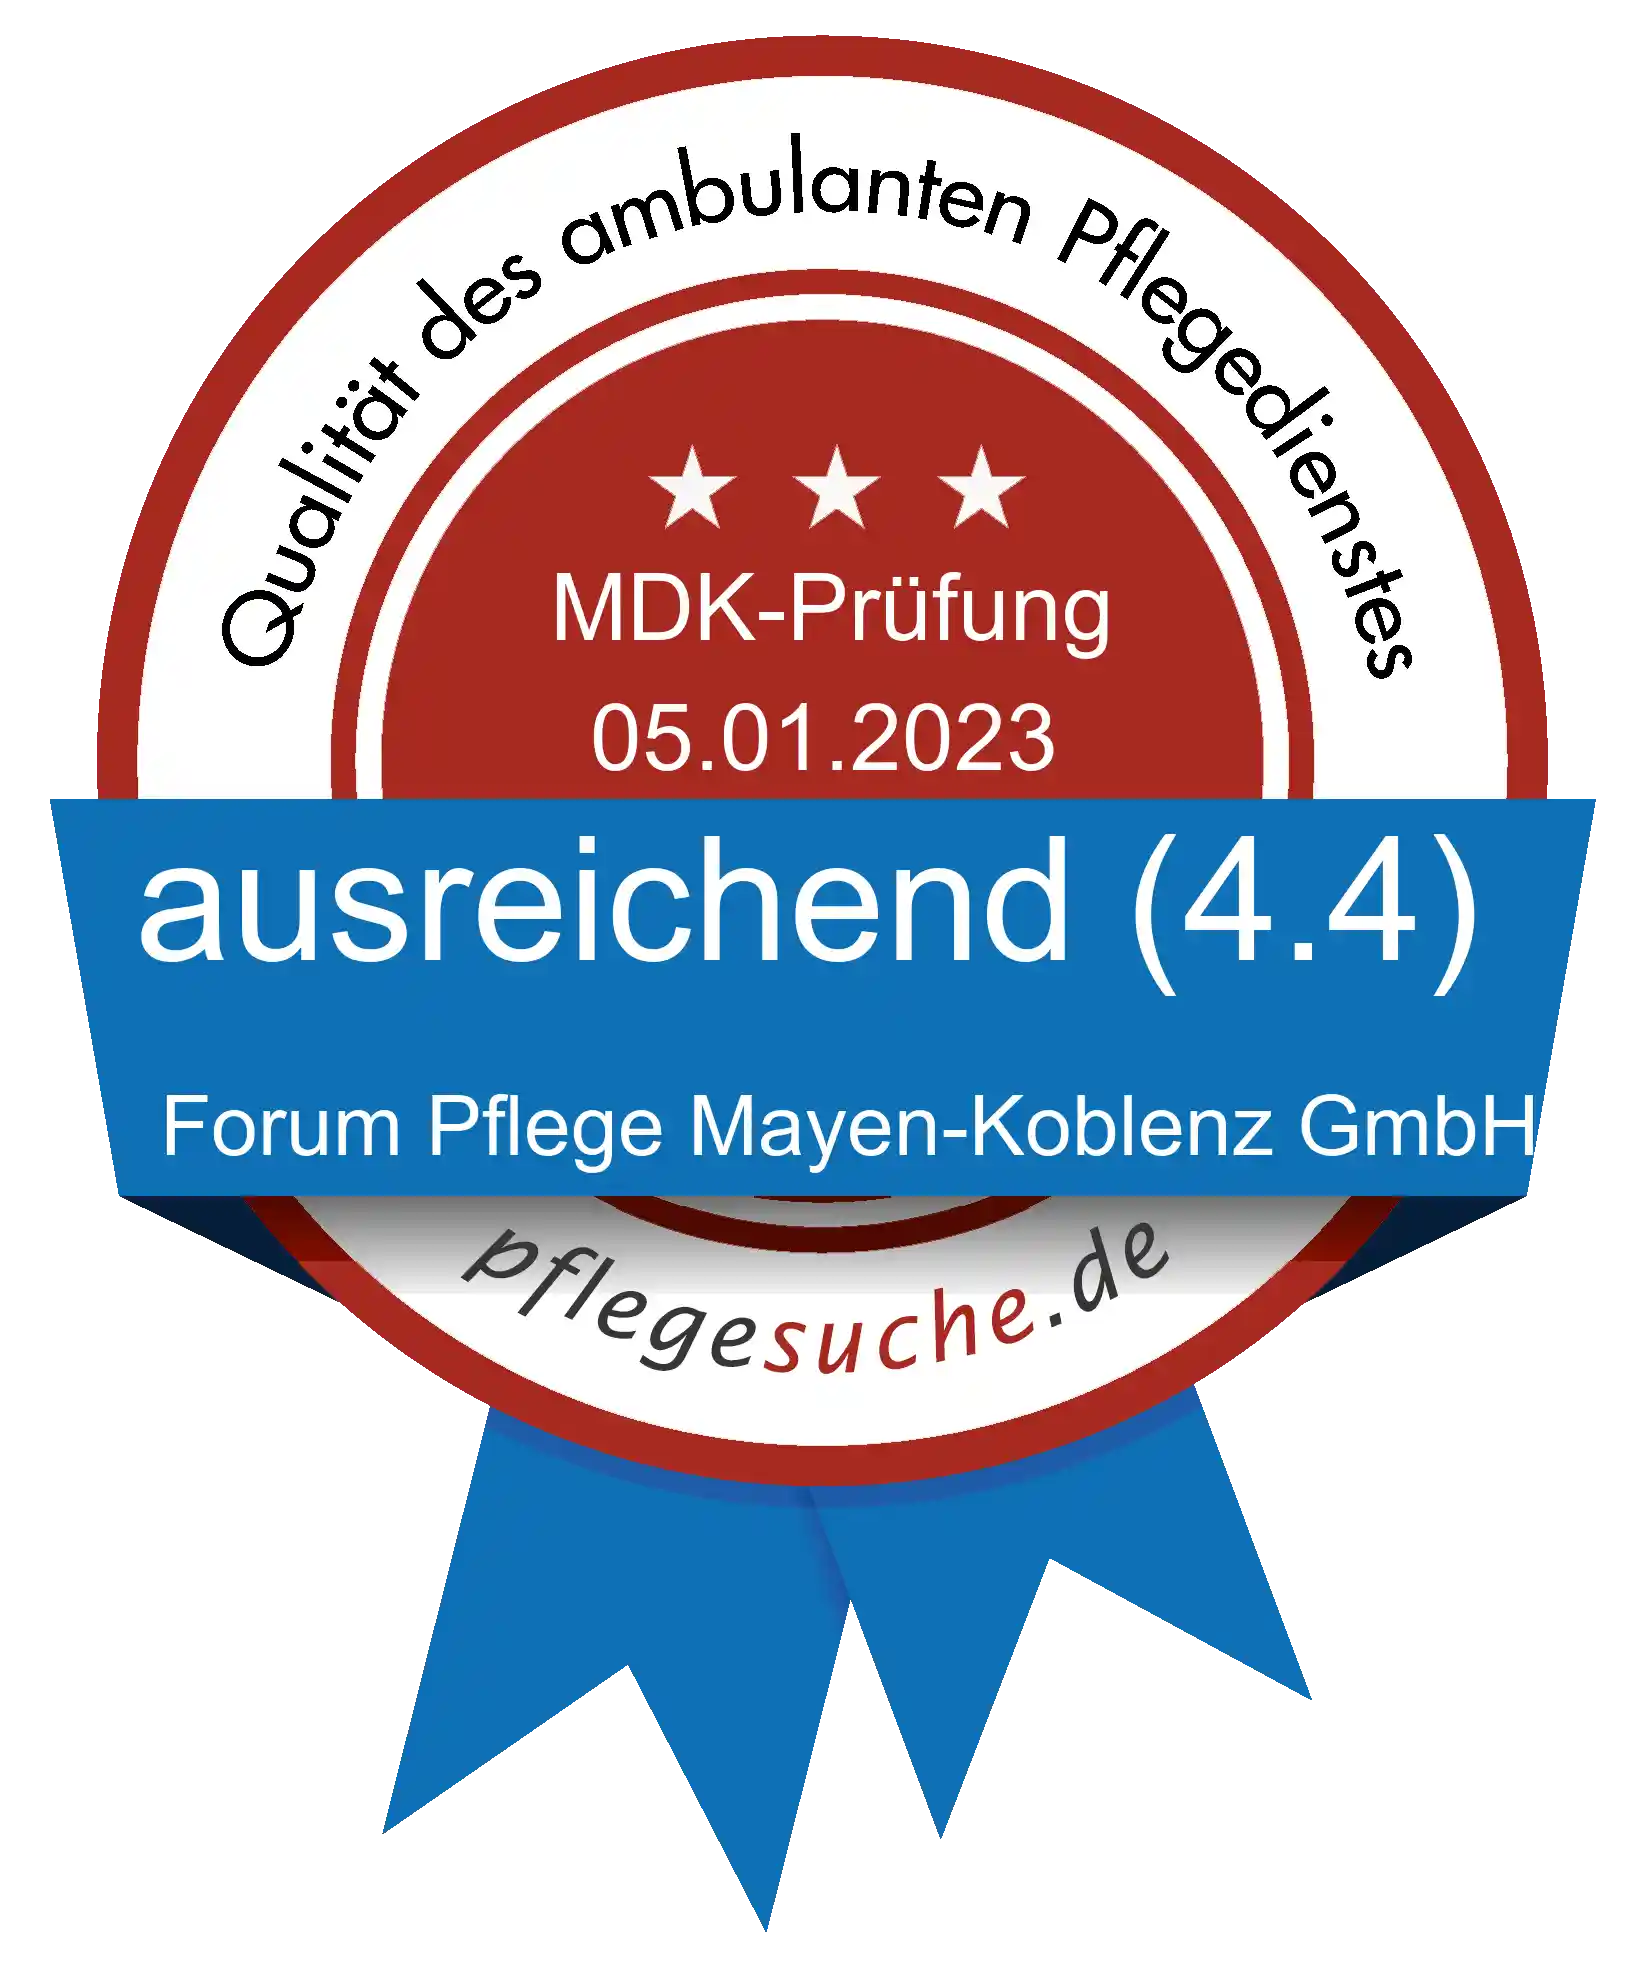 Siegel Benotung: Forum Pflege Mayen-Koblenz GmbH